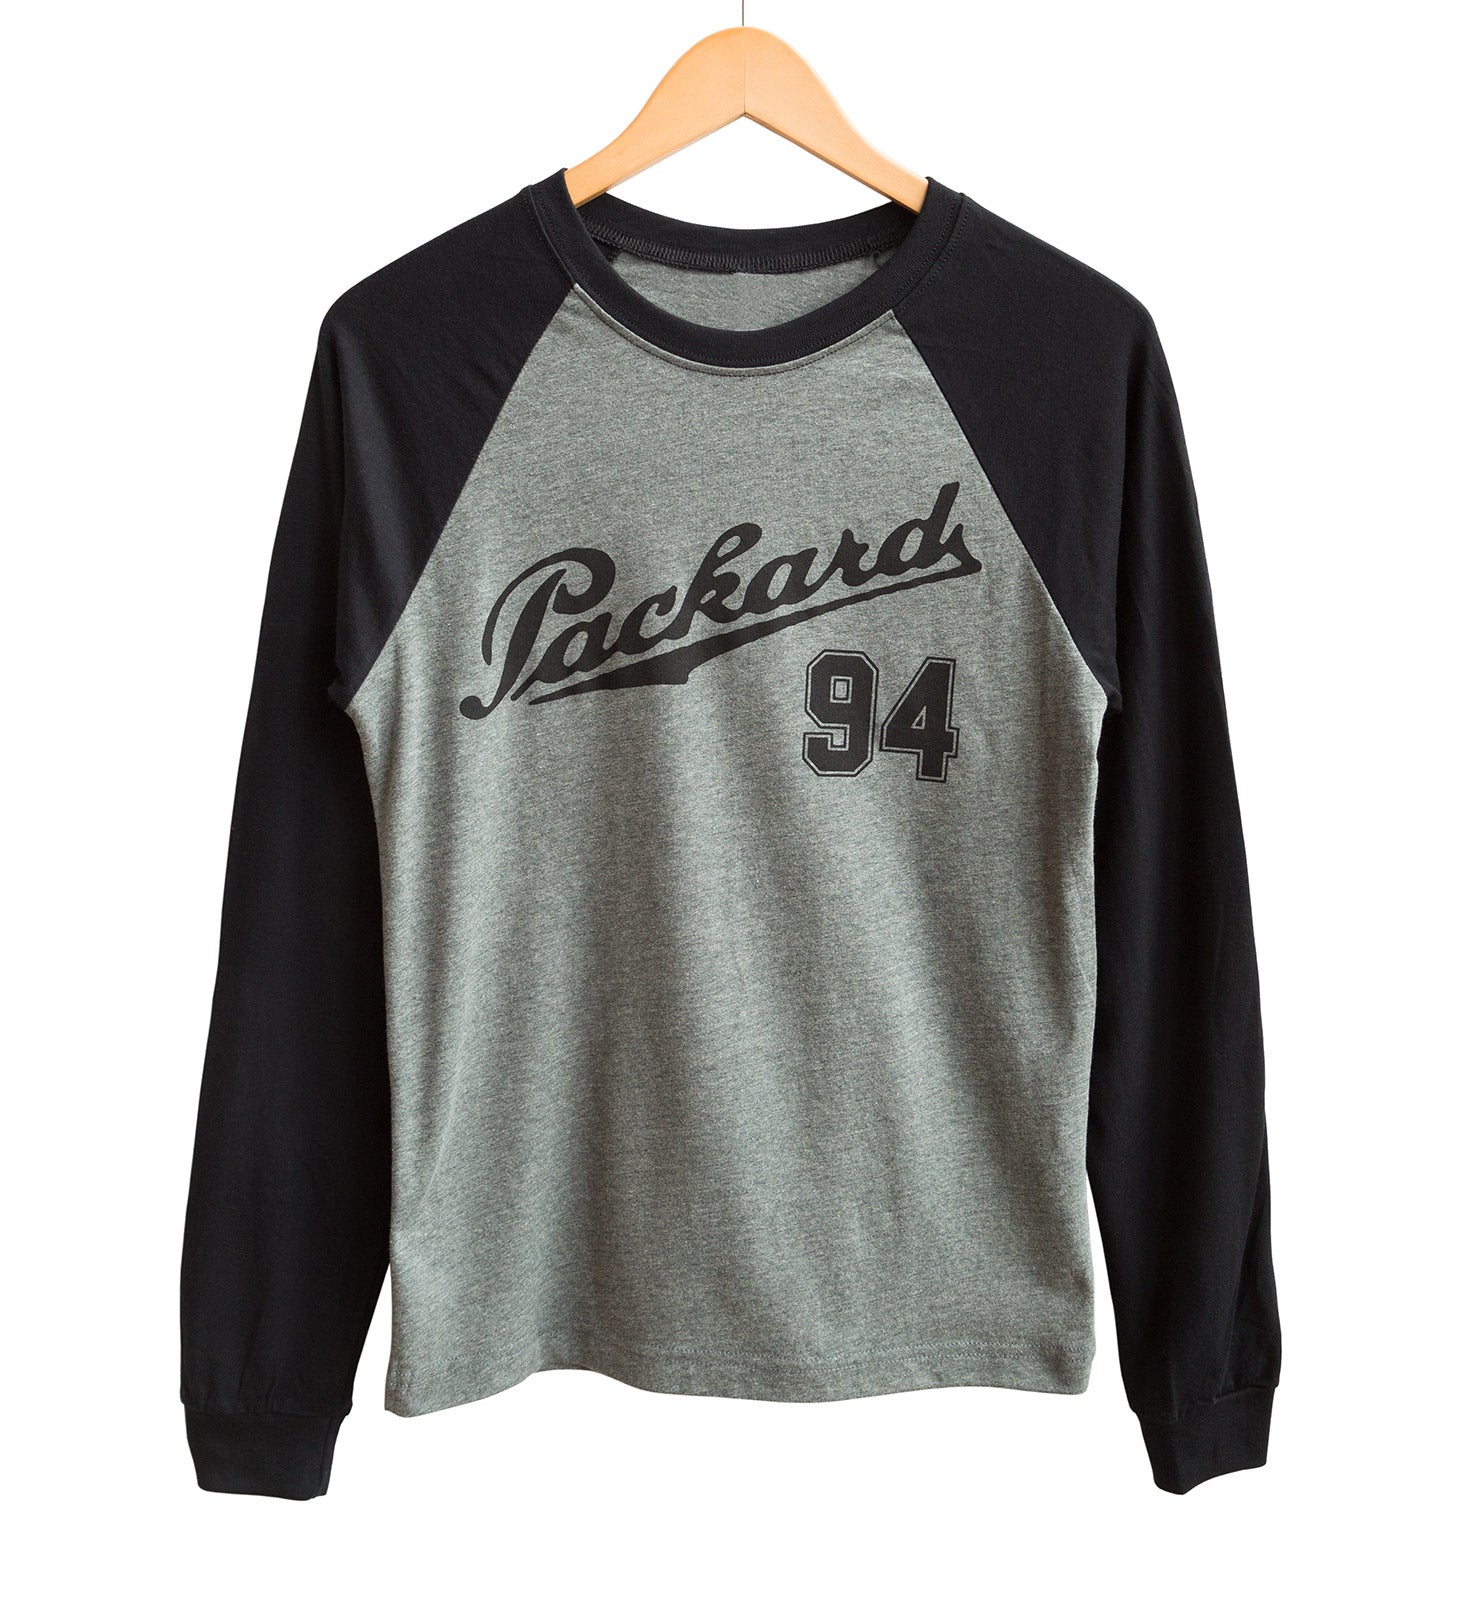 Packard Raves 94, Team Rave Long Sleeve Baseball Shirt – Well Done